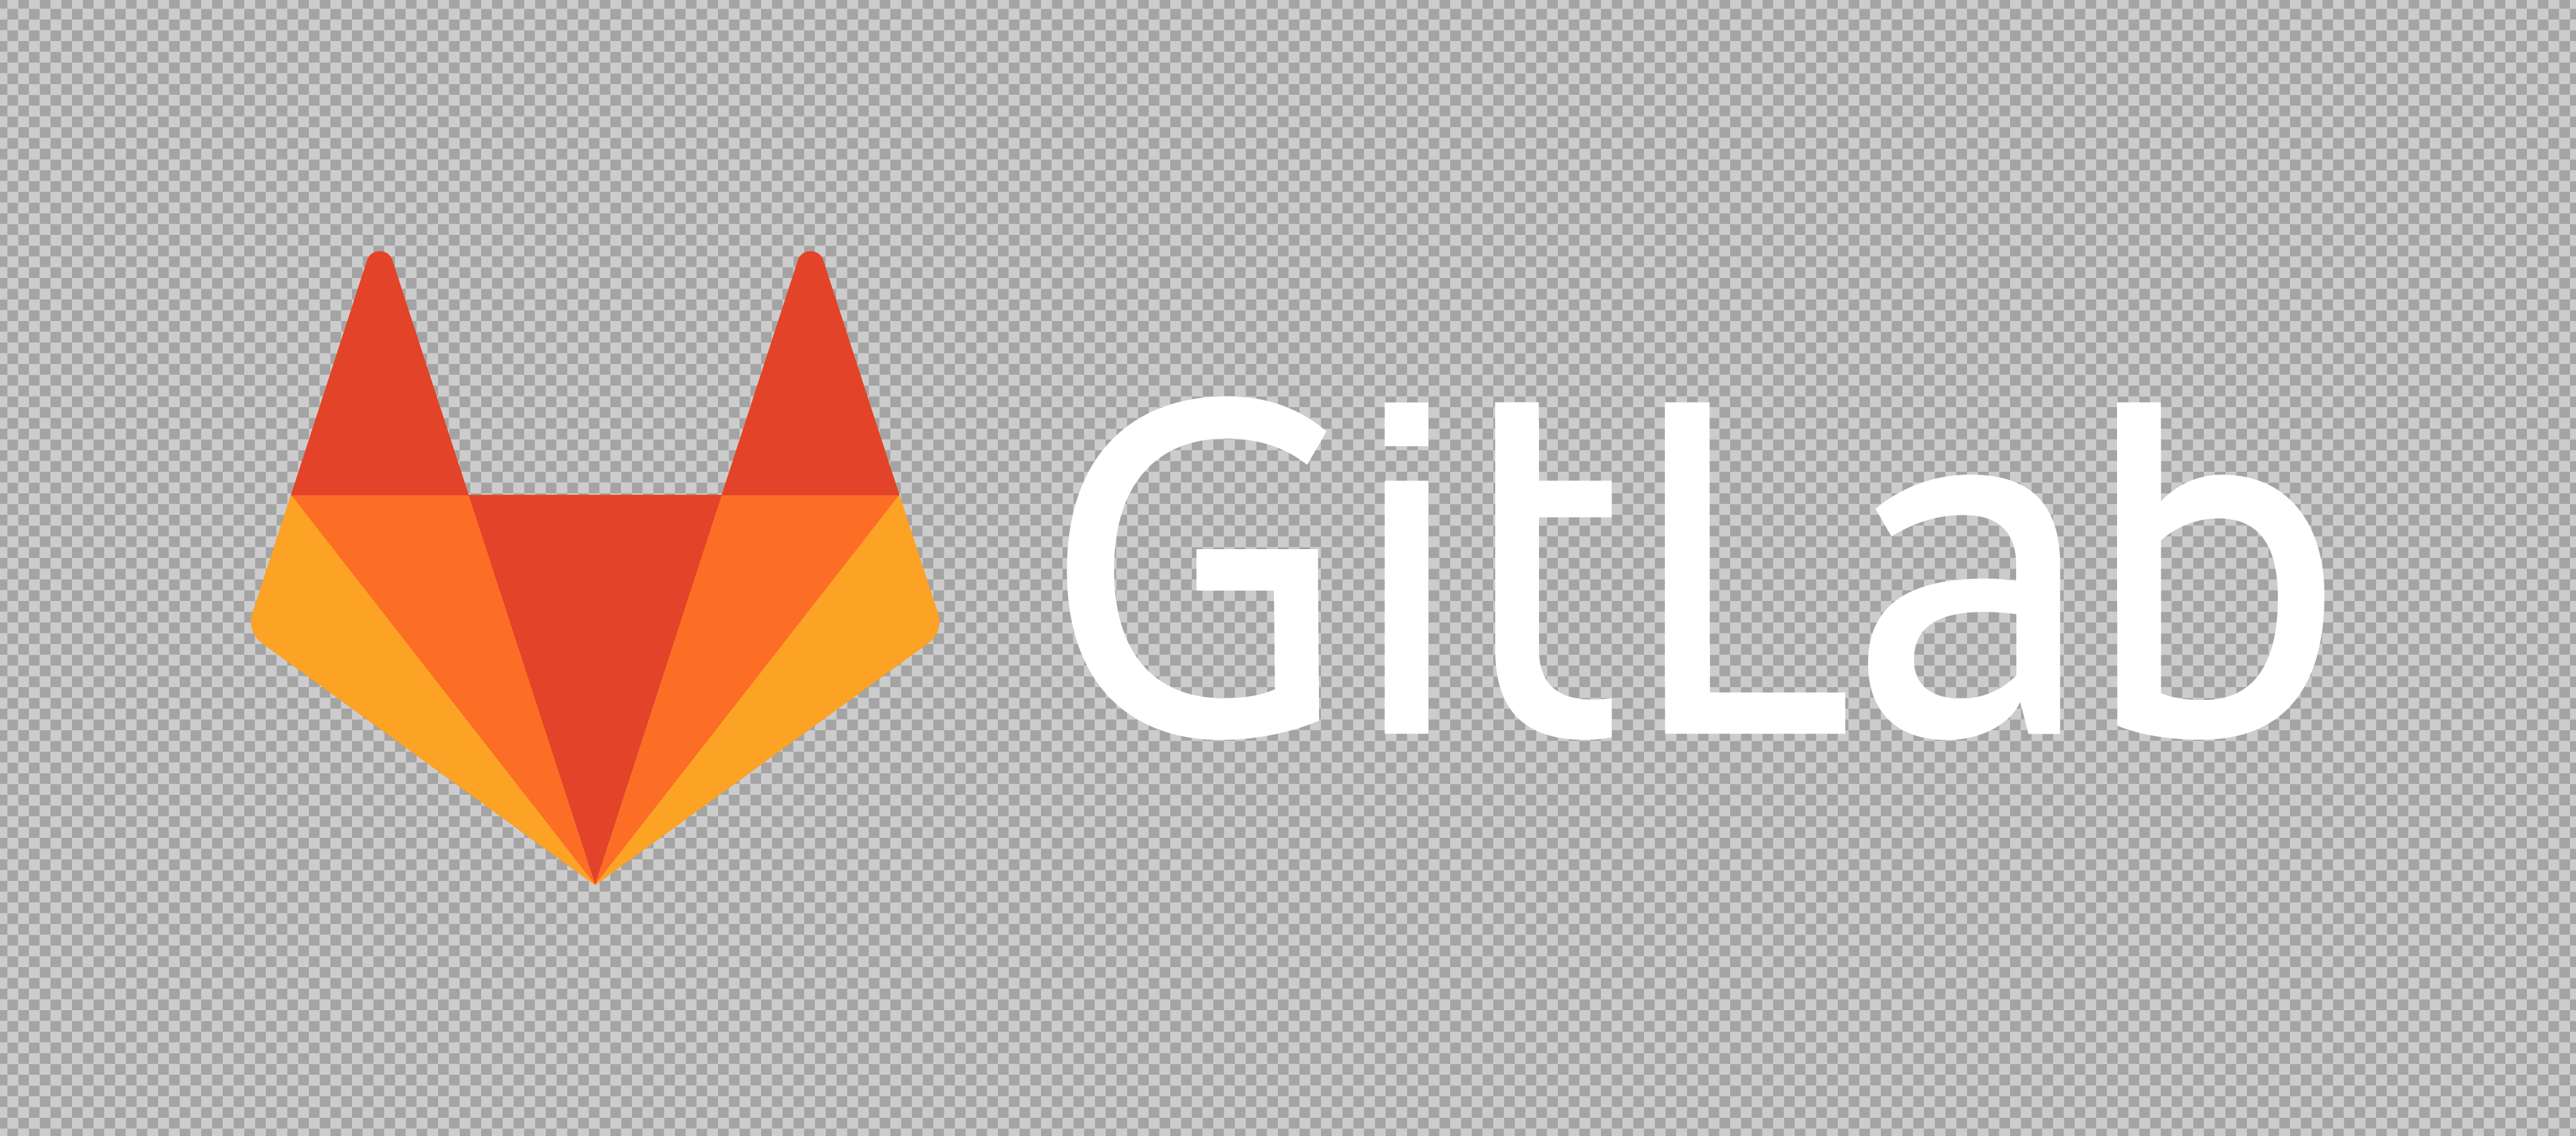 Axosoft Launches Gitkraken In